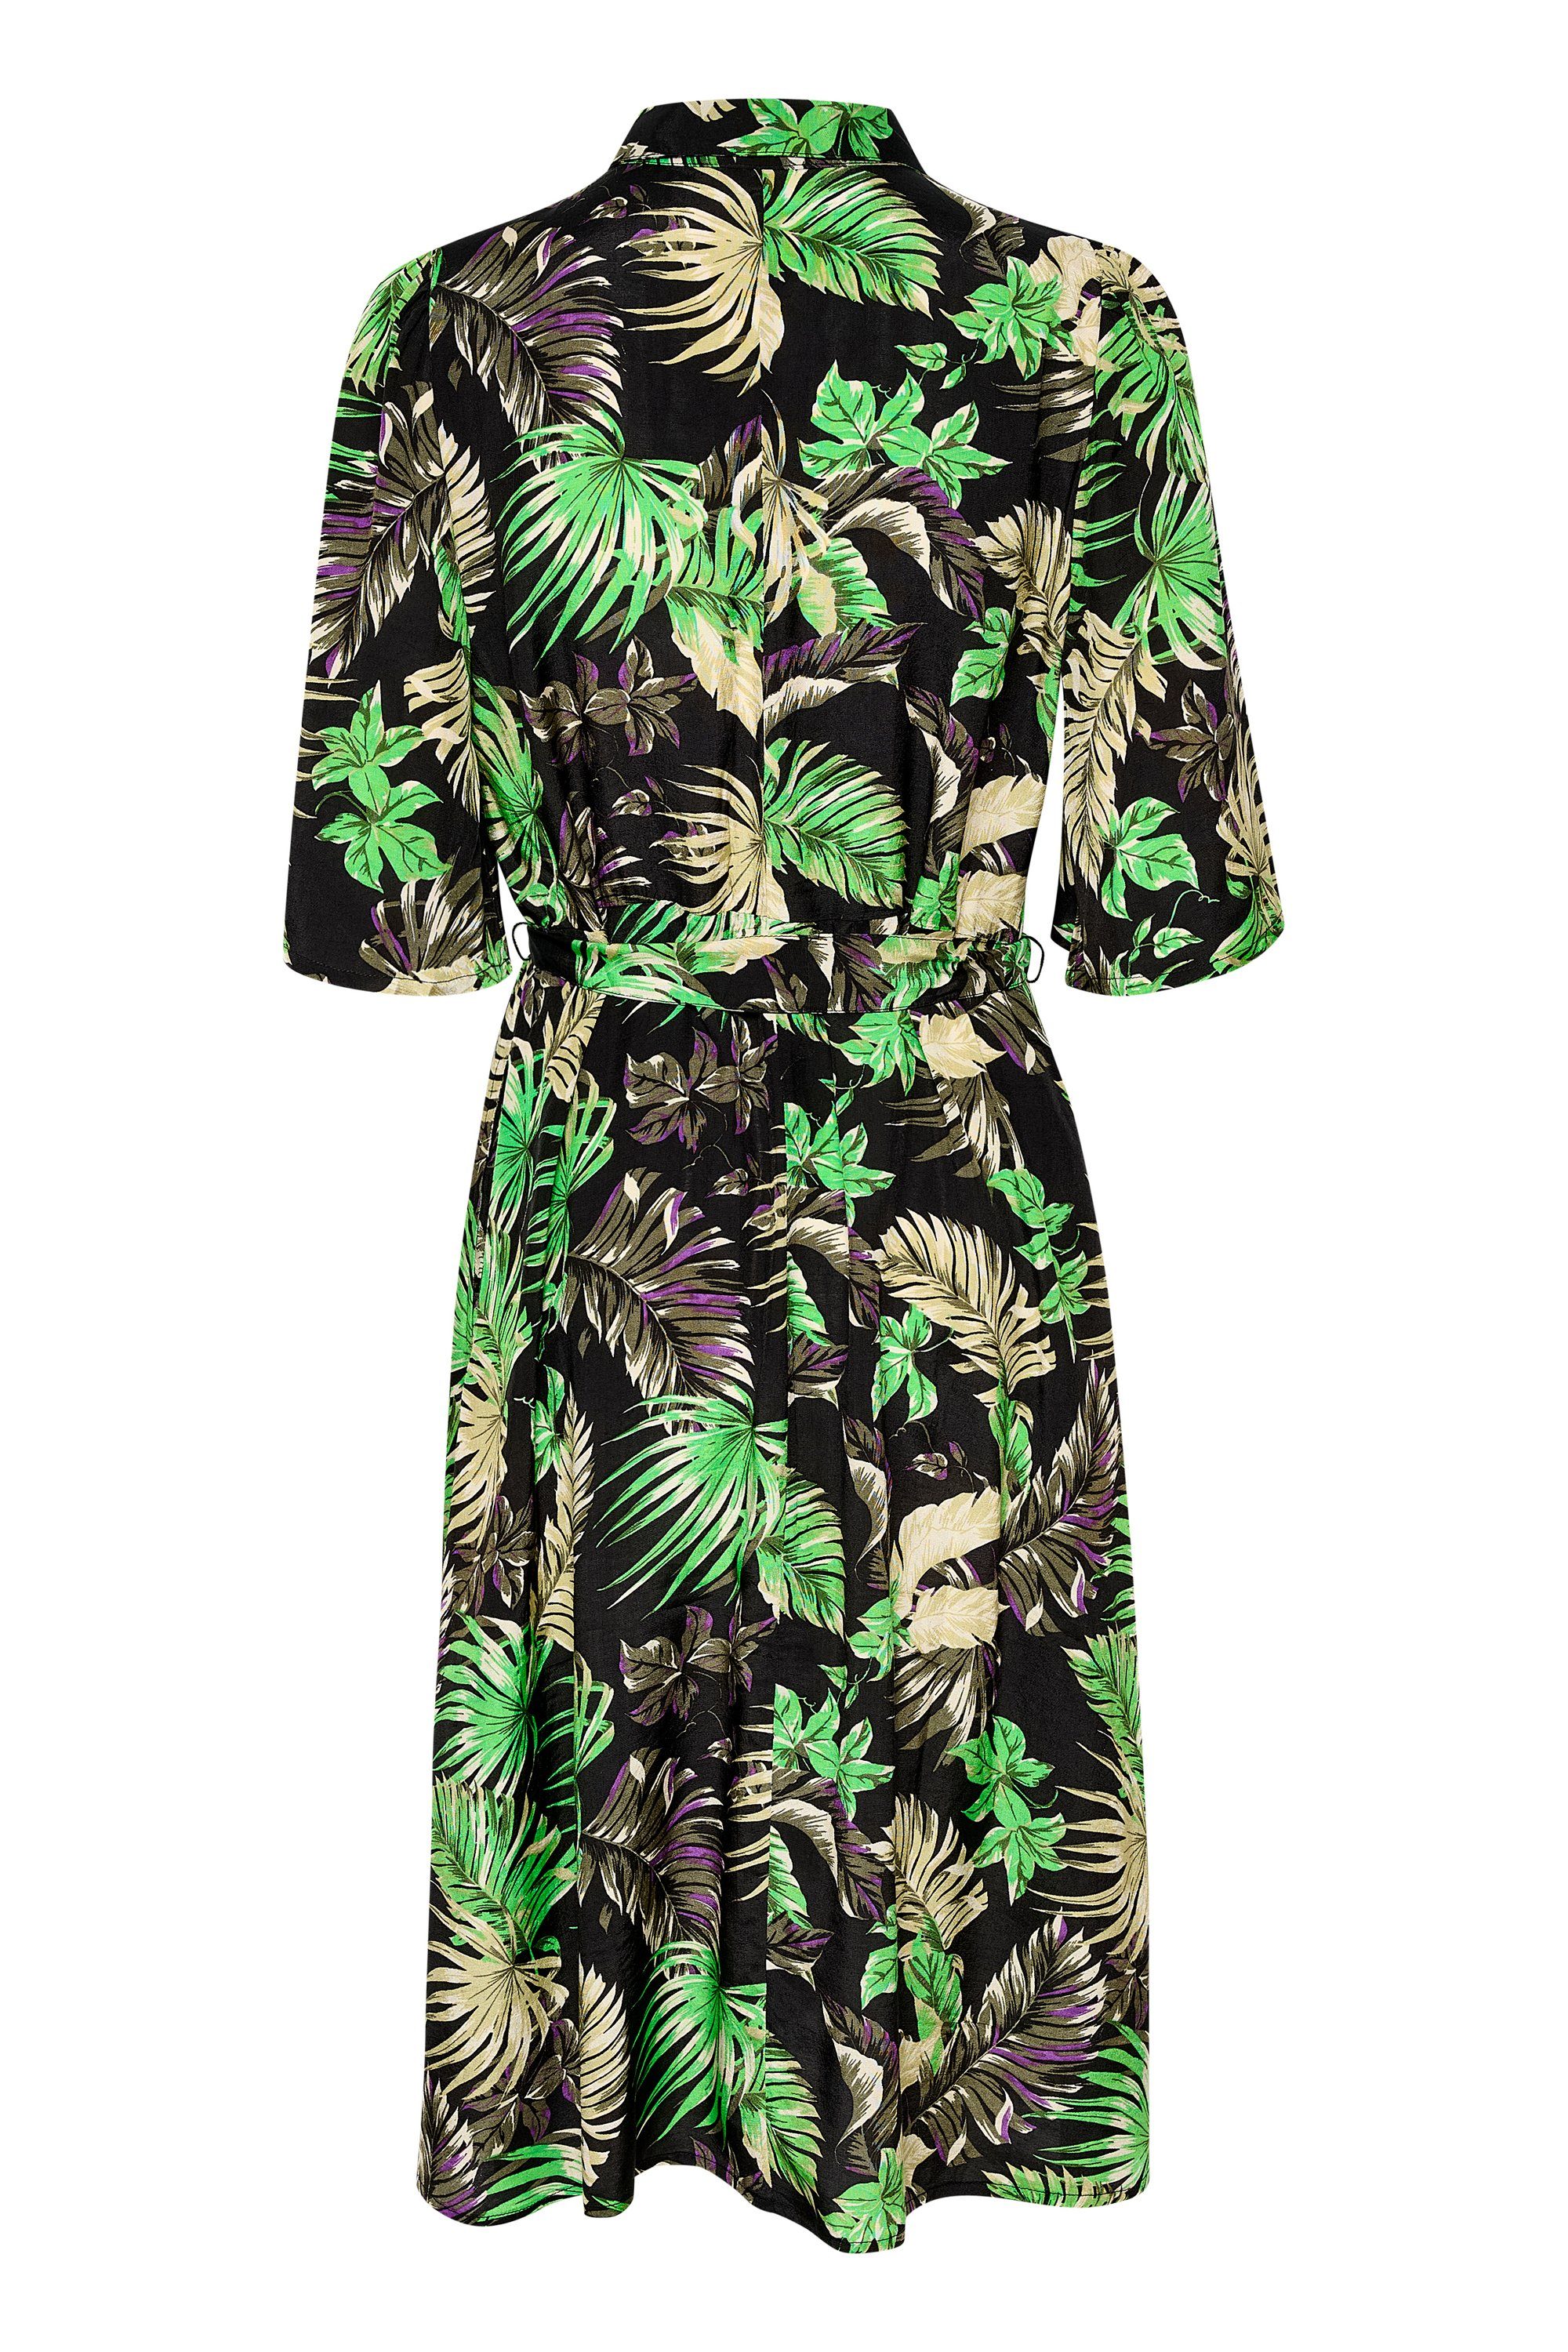 KAFFE Jerseykleid Print Kleid KAsafir Palm Green/Black/Violet